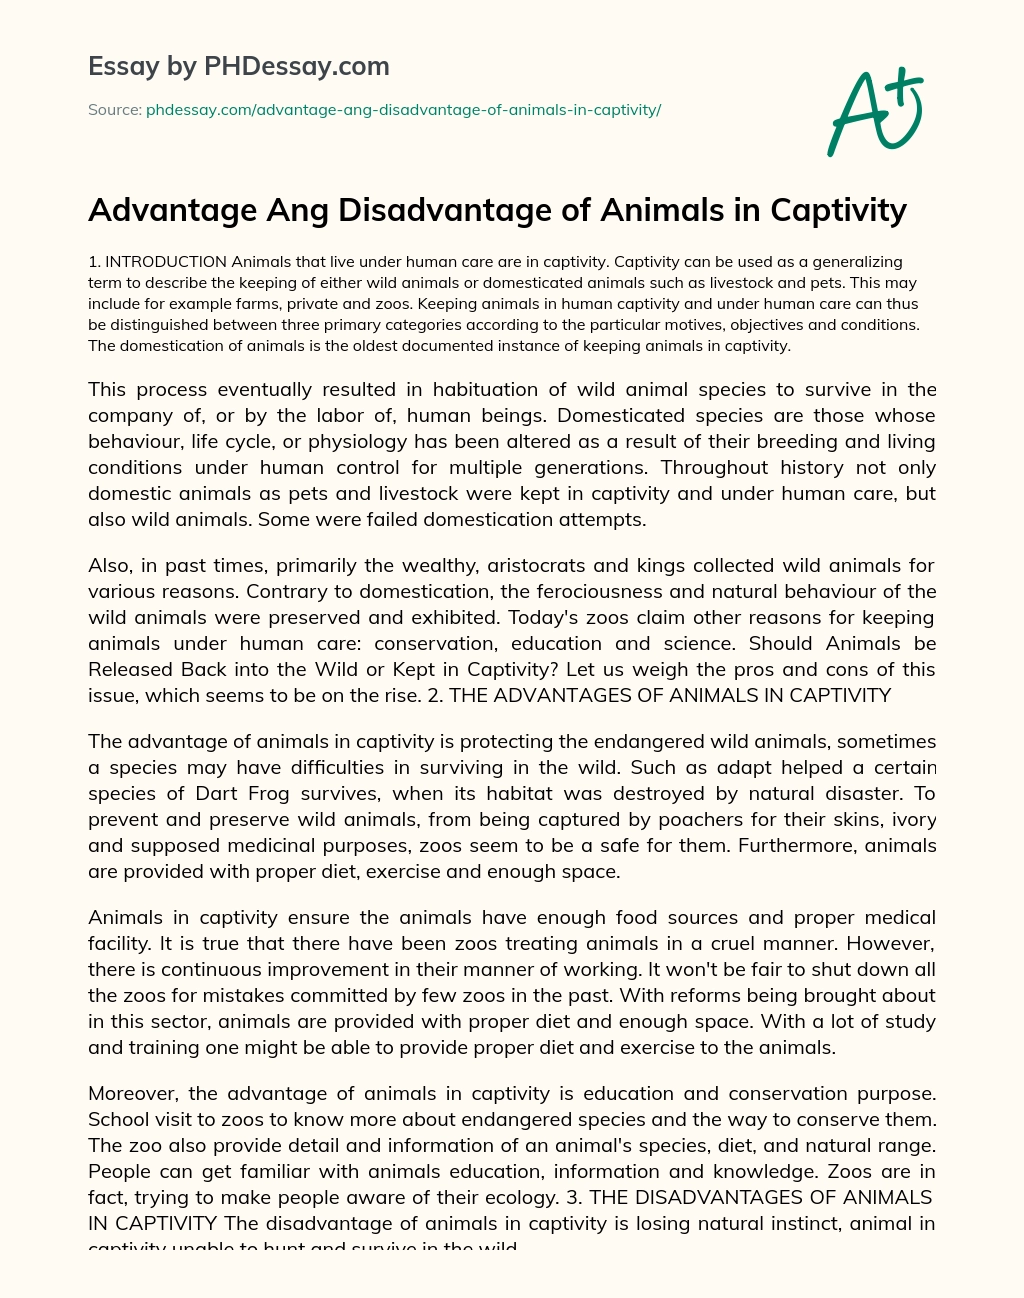 Advantage Ang Disadvantage Of Animals In Captivity Argumentative Essay  Example 